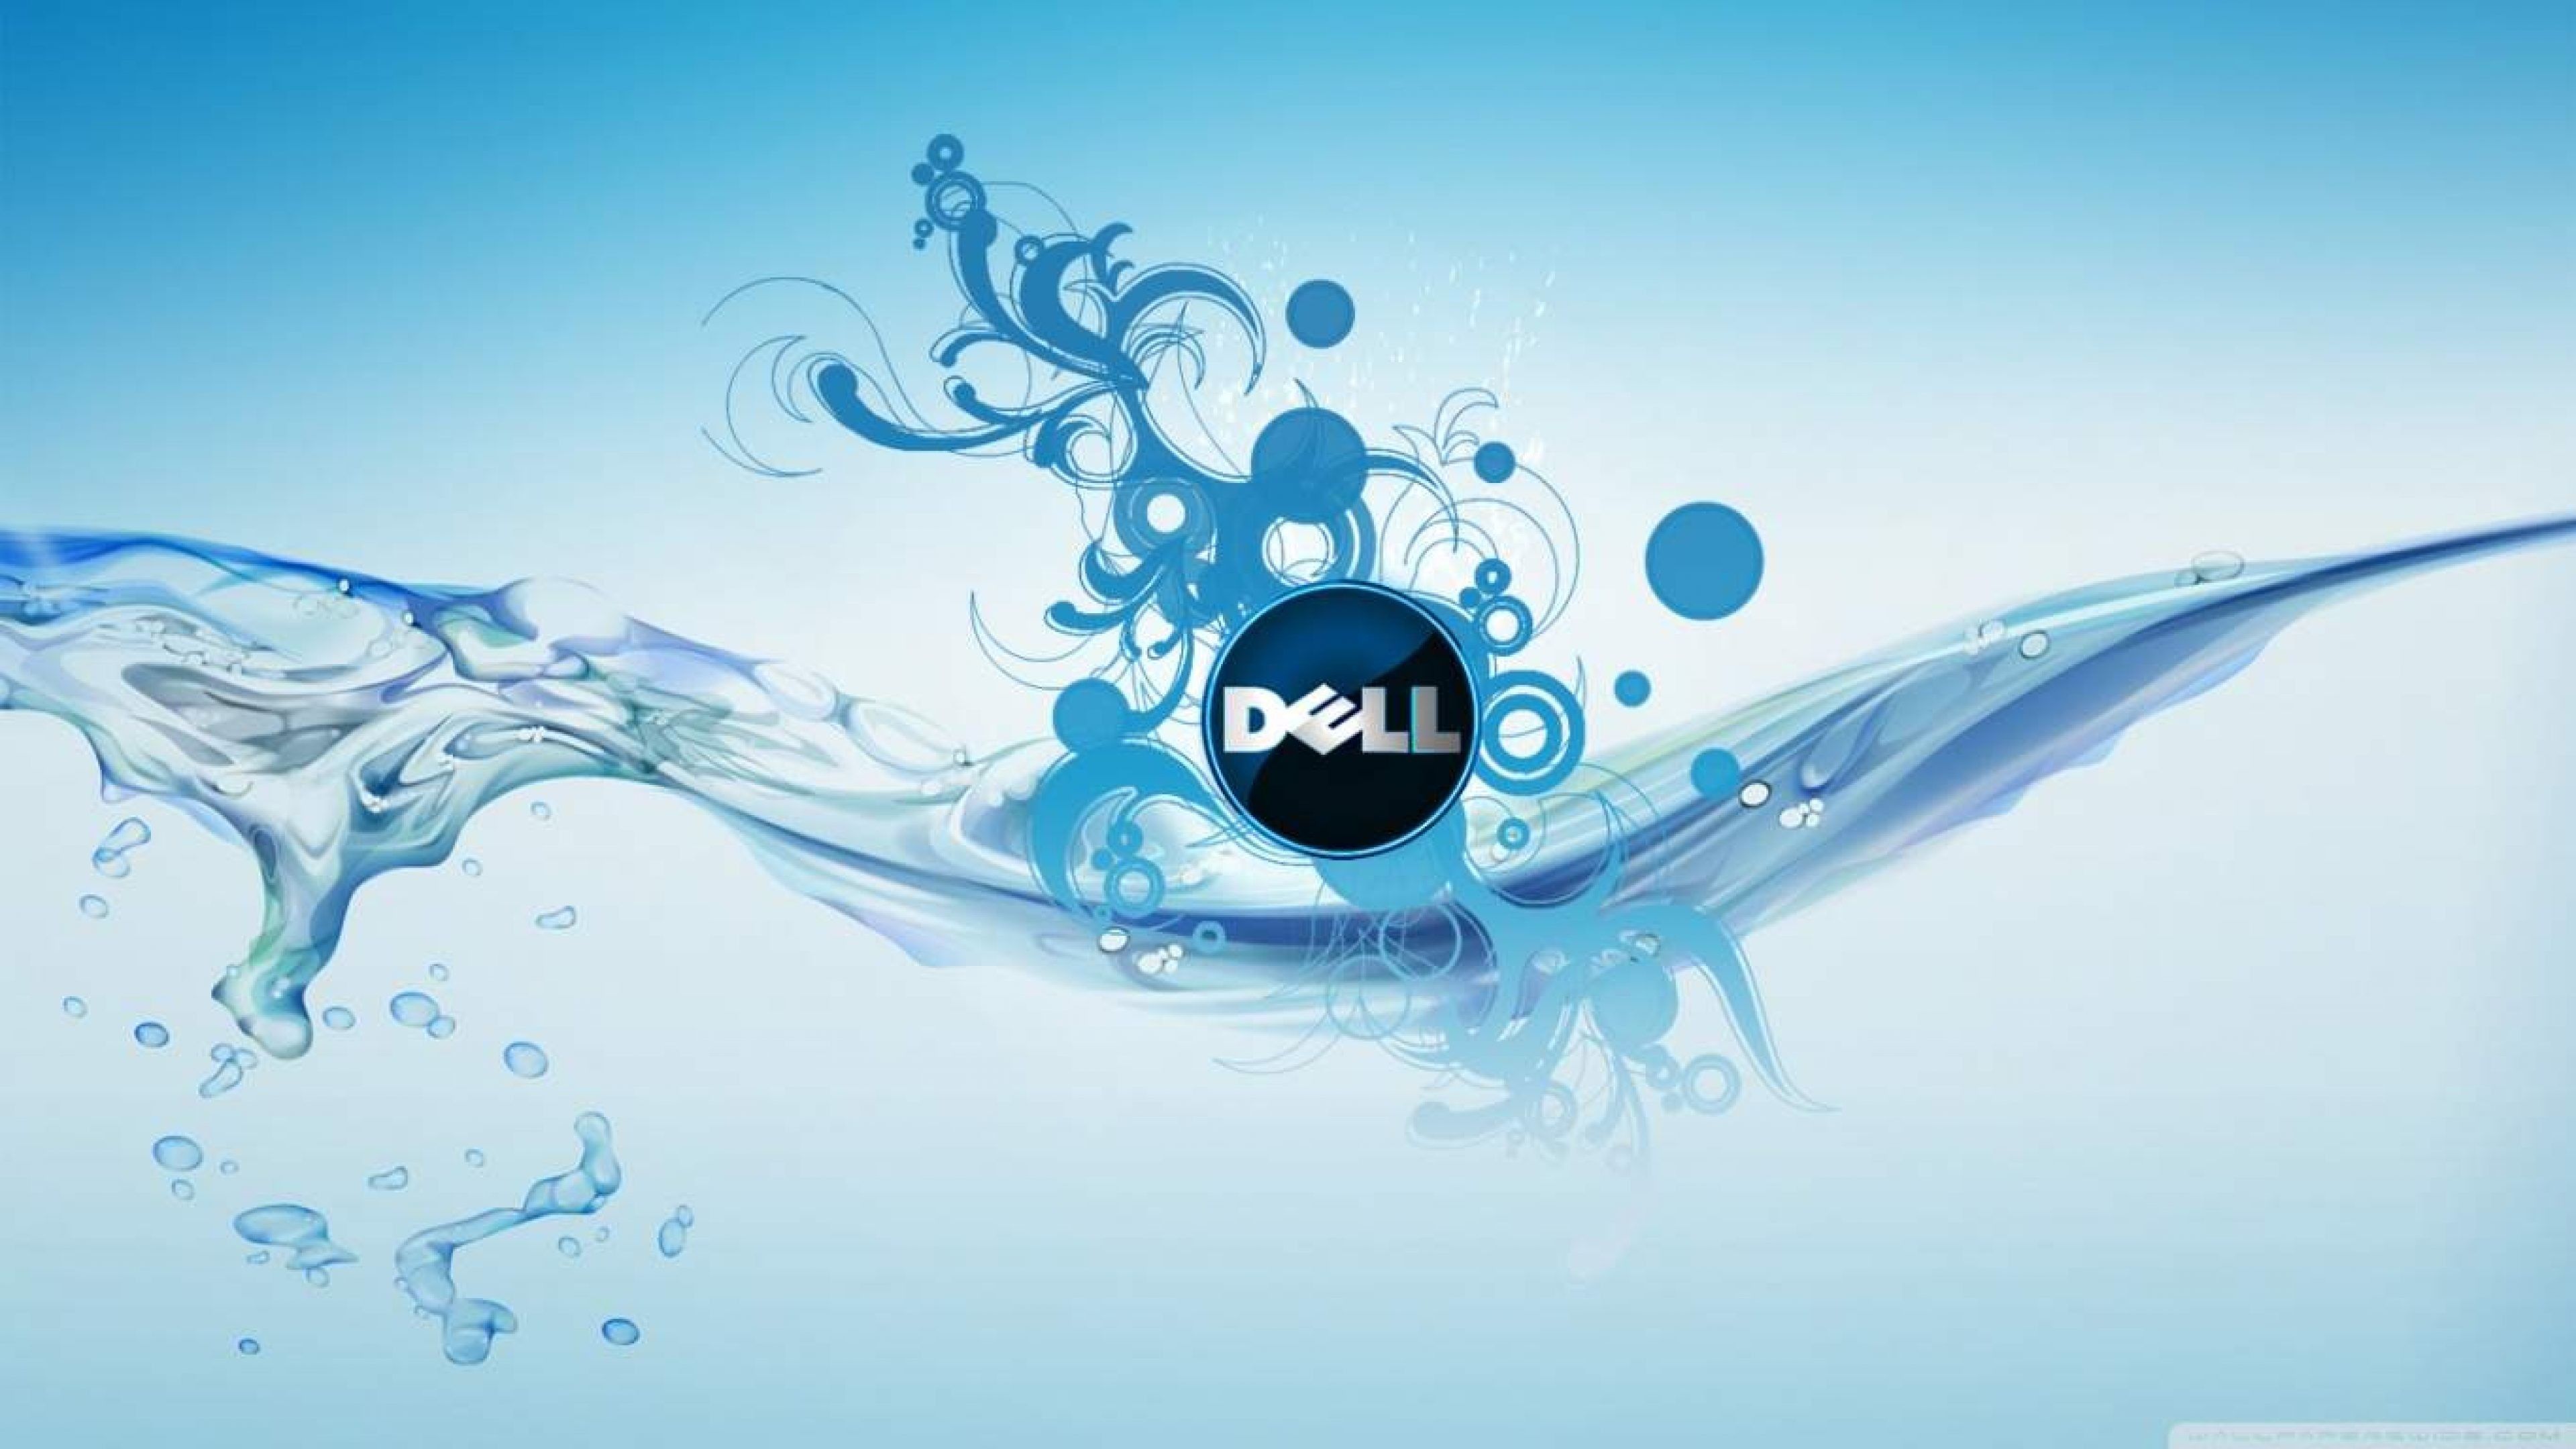 Dell Wallpaper Windows 10 - HD Wallpaper 